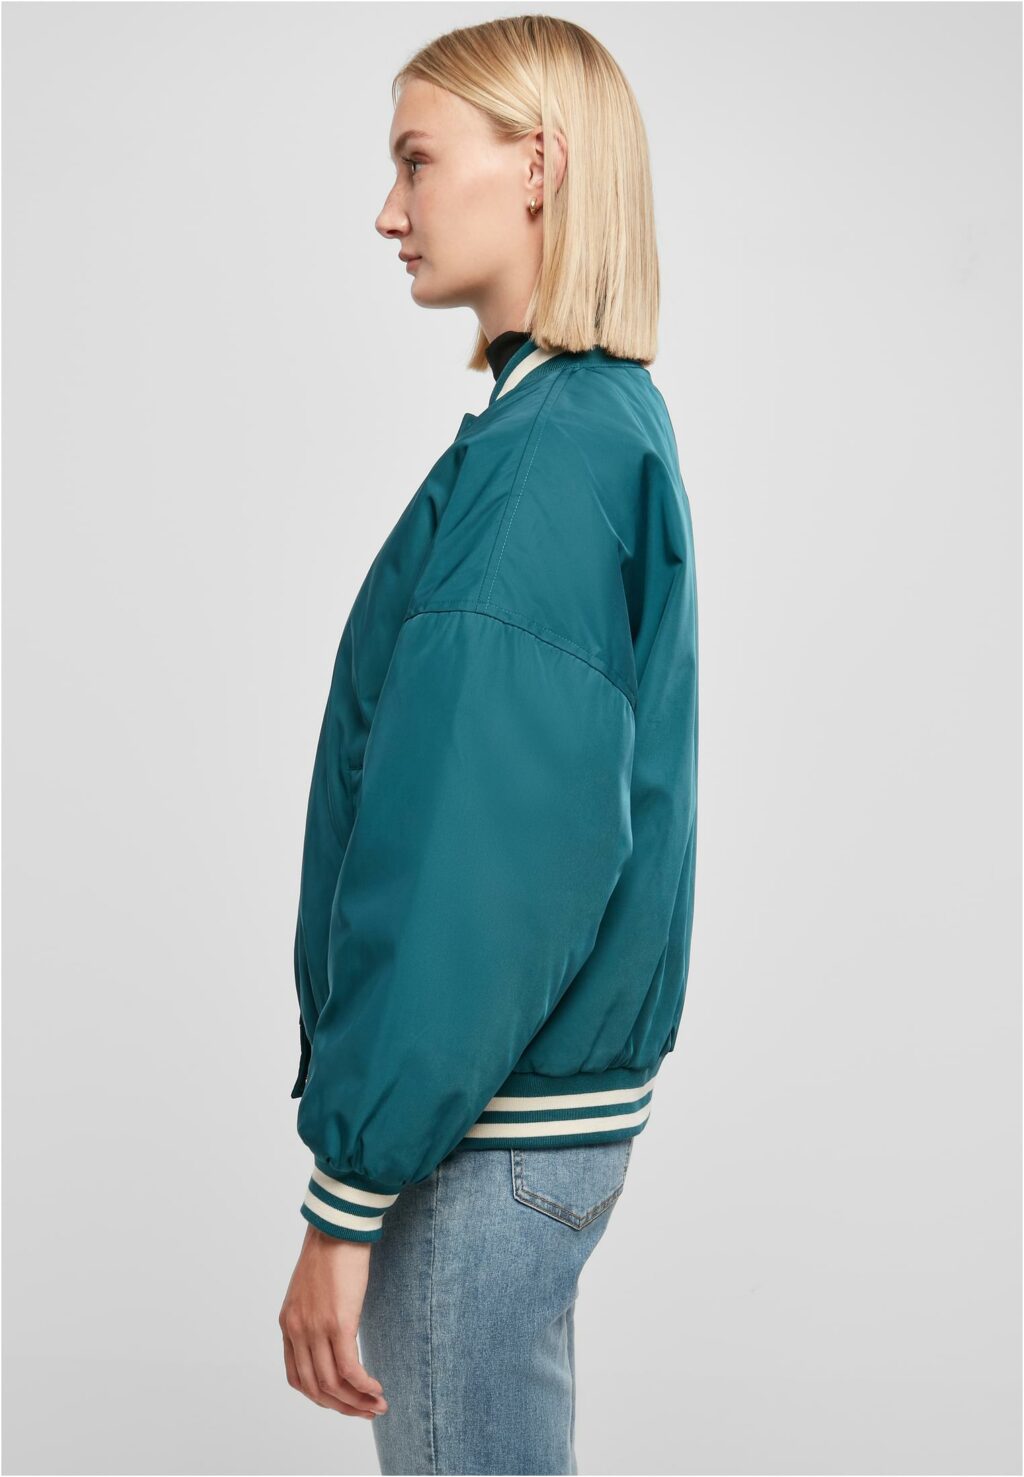 Urban Classics Ladies Oversized Recycled College Jacket jasper TB5082